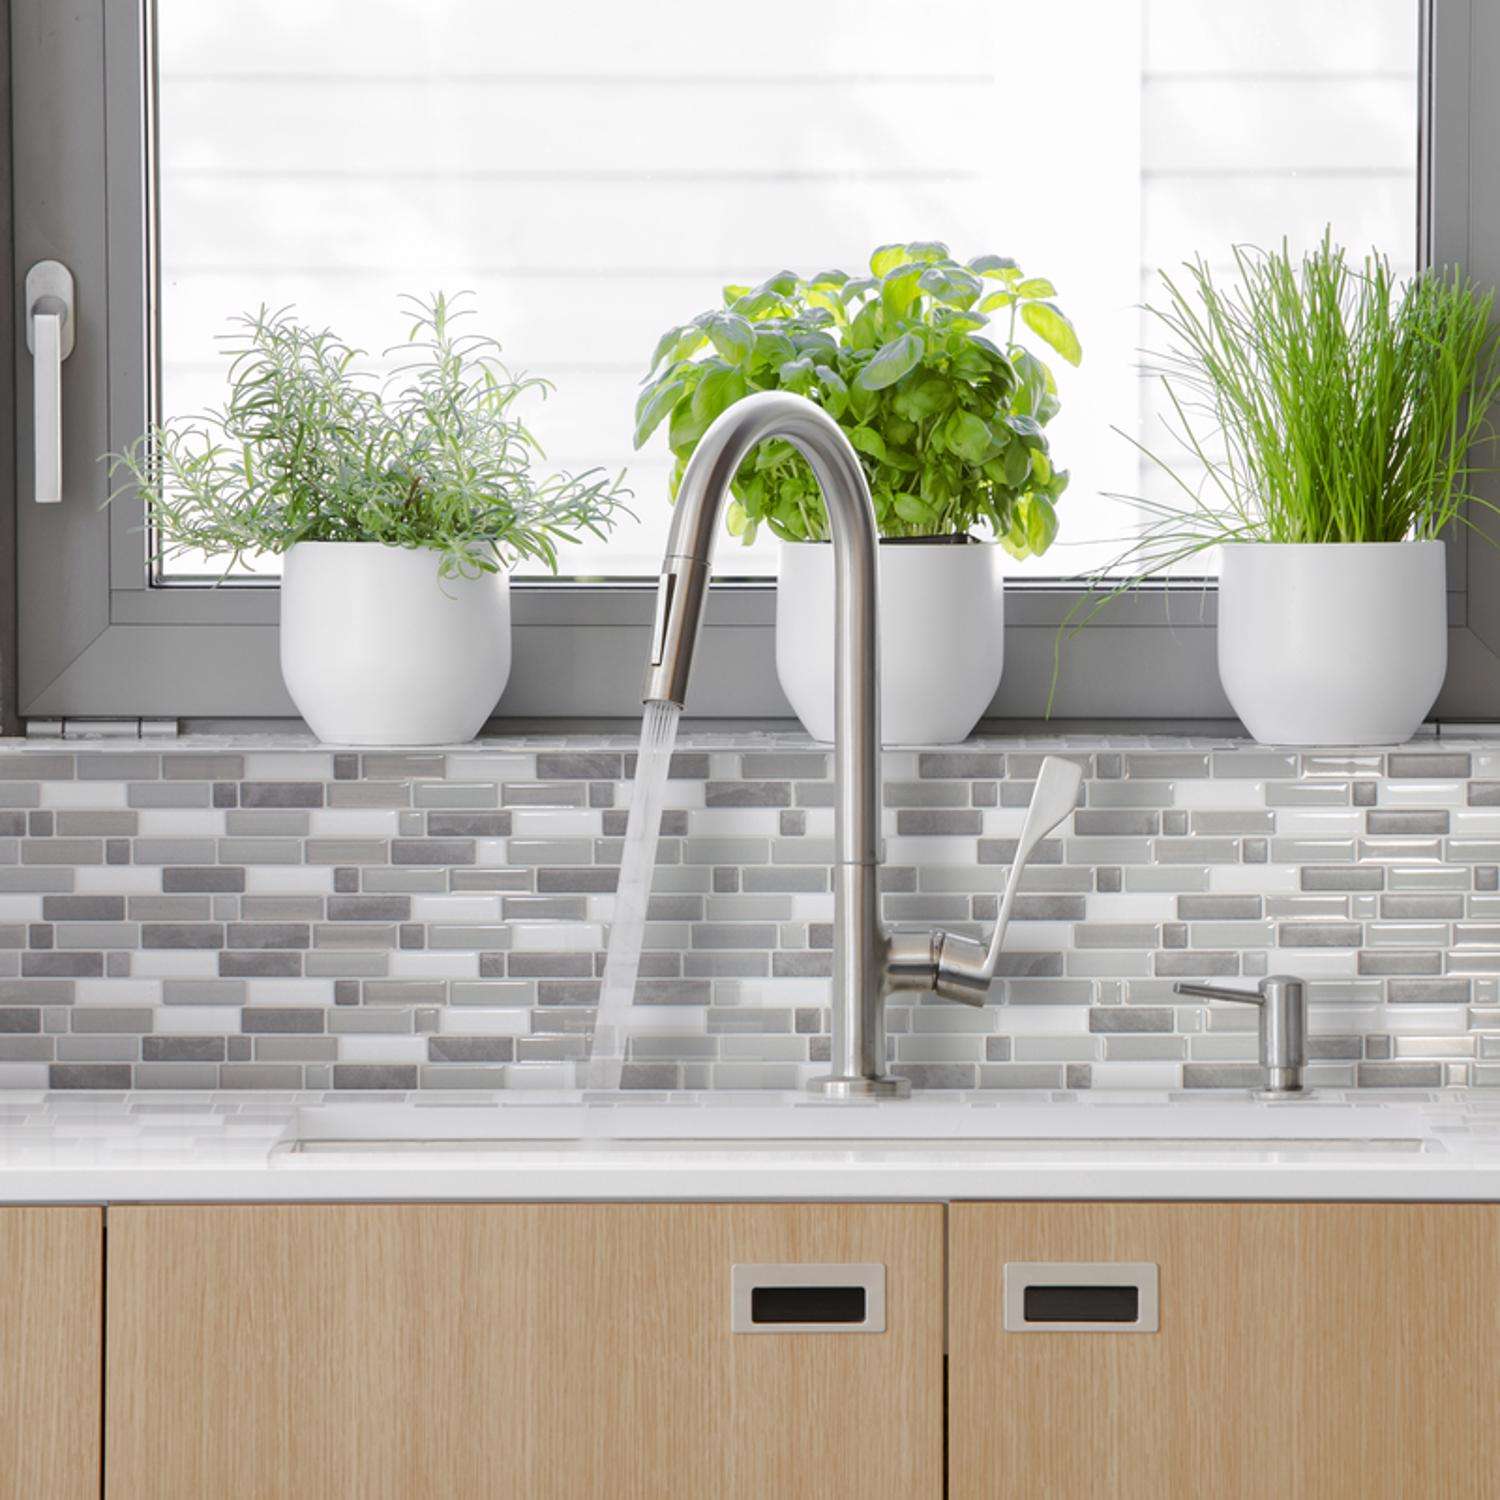 How Are They Holding up? Smart Tile Backsplash Review  Smart tiles  backsplash, Kitchen backsplash pictures, Smart tiles